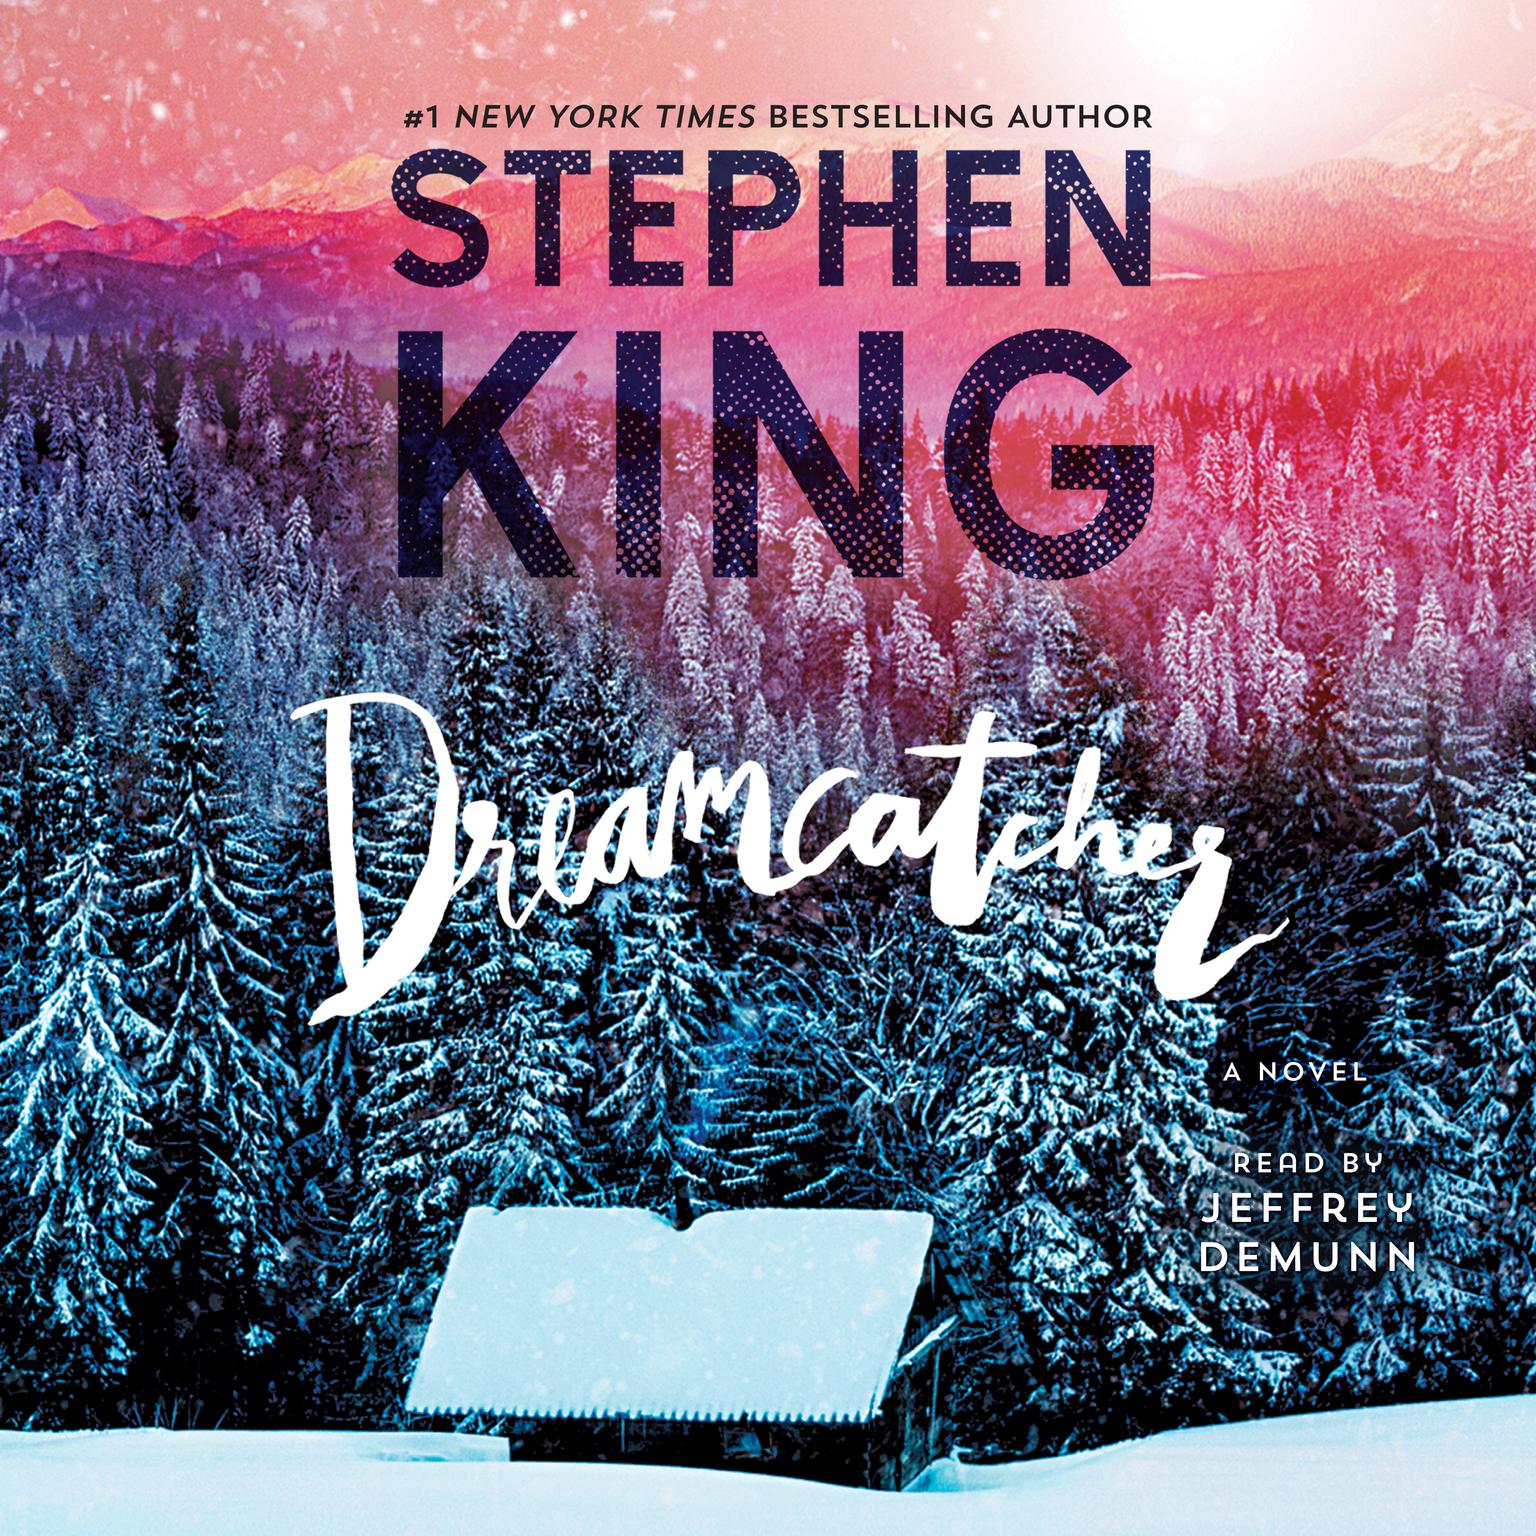 Dreamcatcher Audiobook, by Stephen King